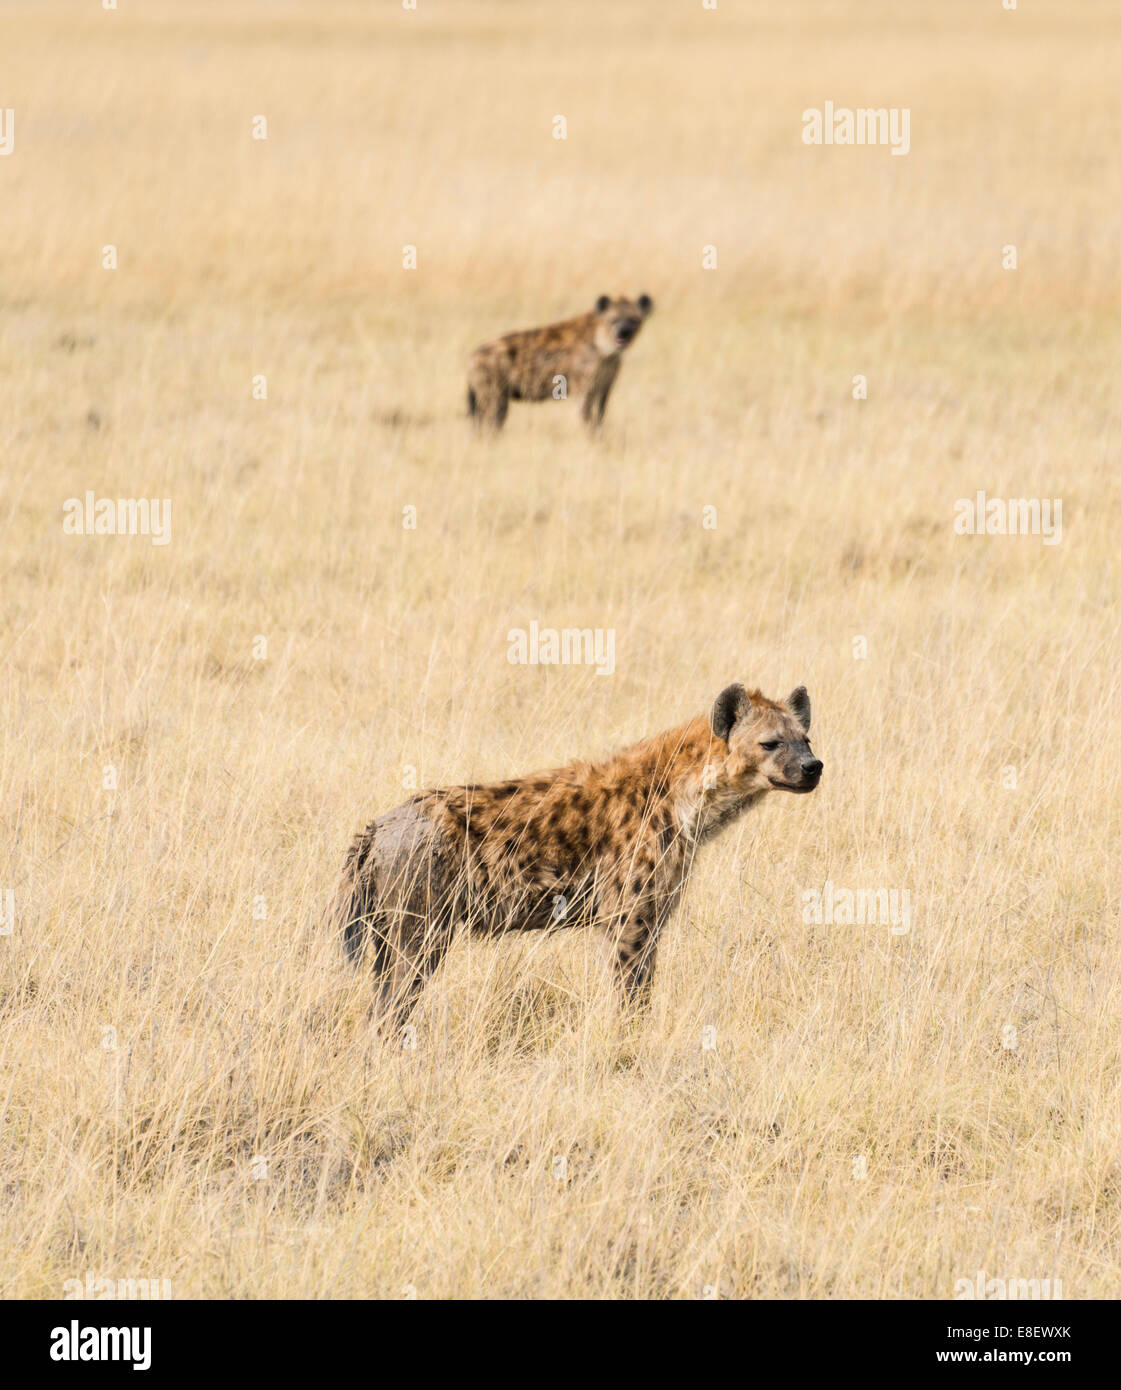 Spotted Hyenas (Crocuta crocuta) in the dry grass, Etosha National Park, Namibia Stock Photo